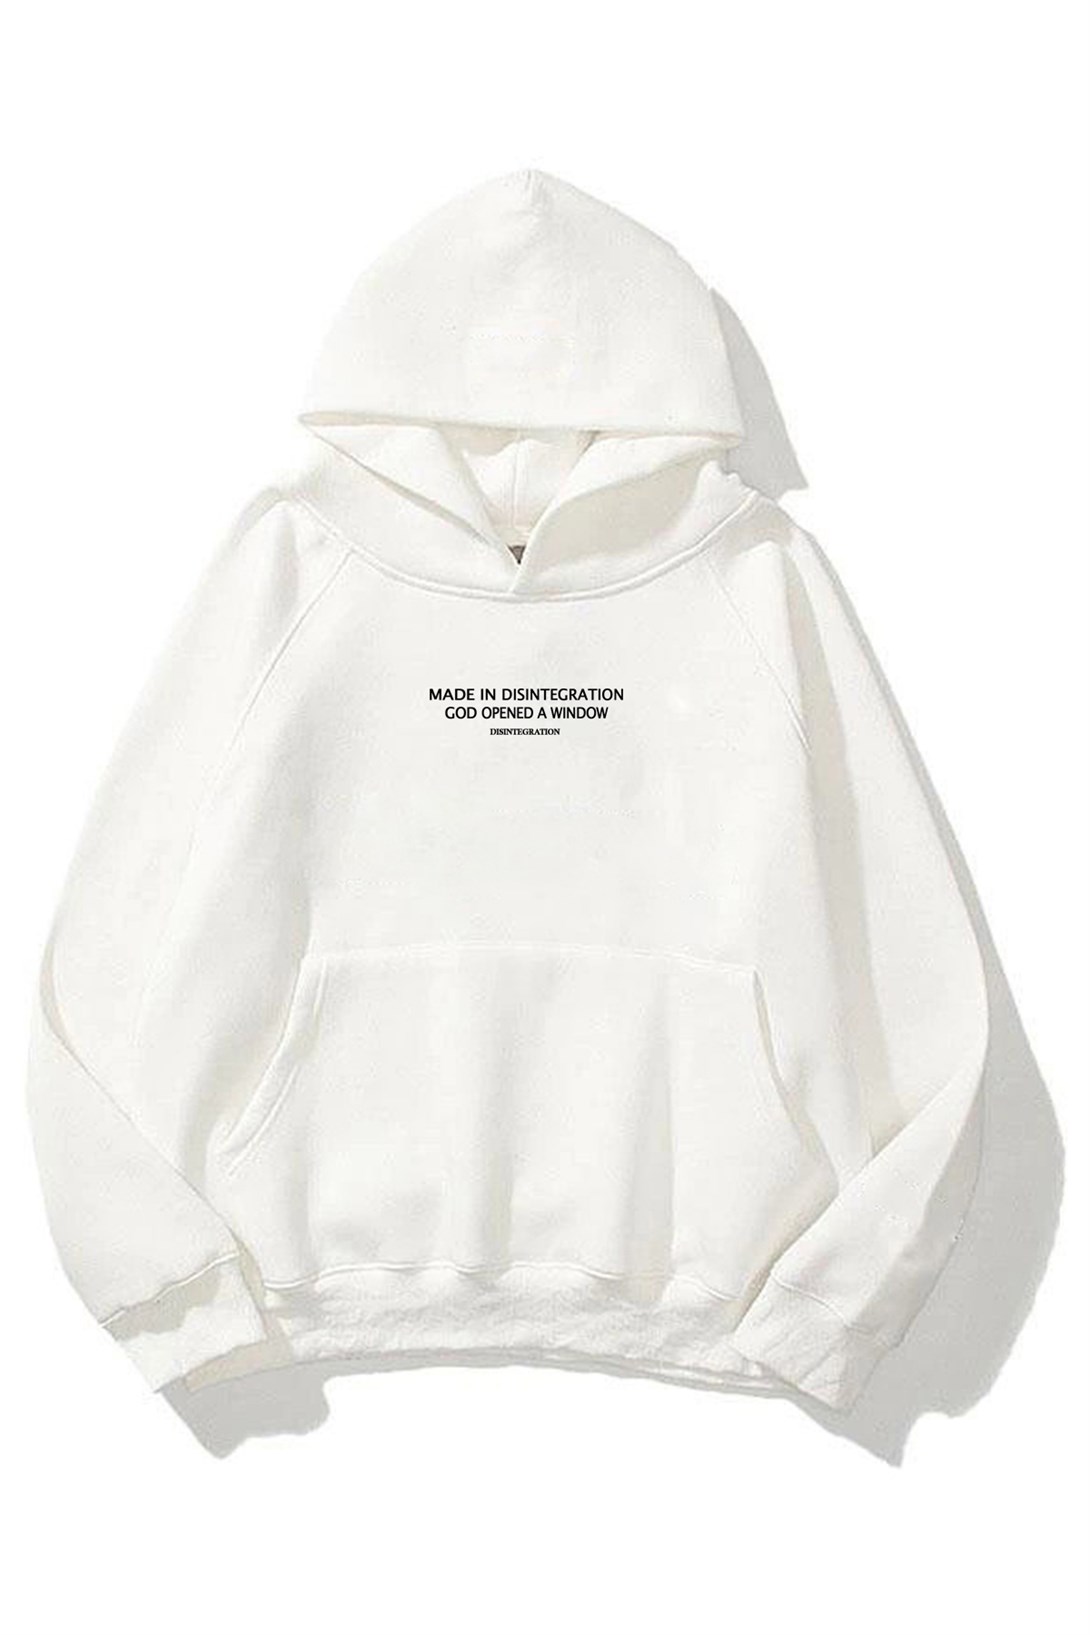 Trendiz Made in Disintegration Beyaz Unisex Sweatshirt